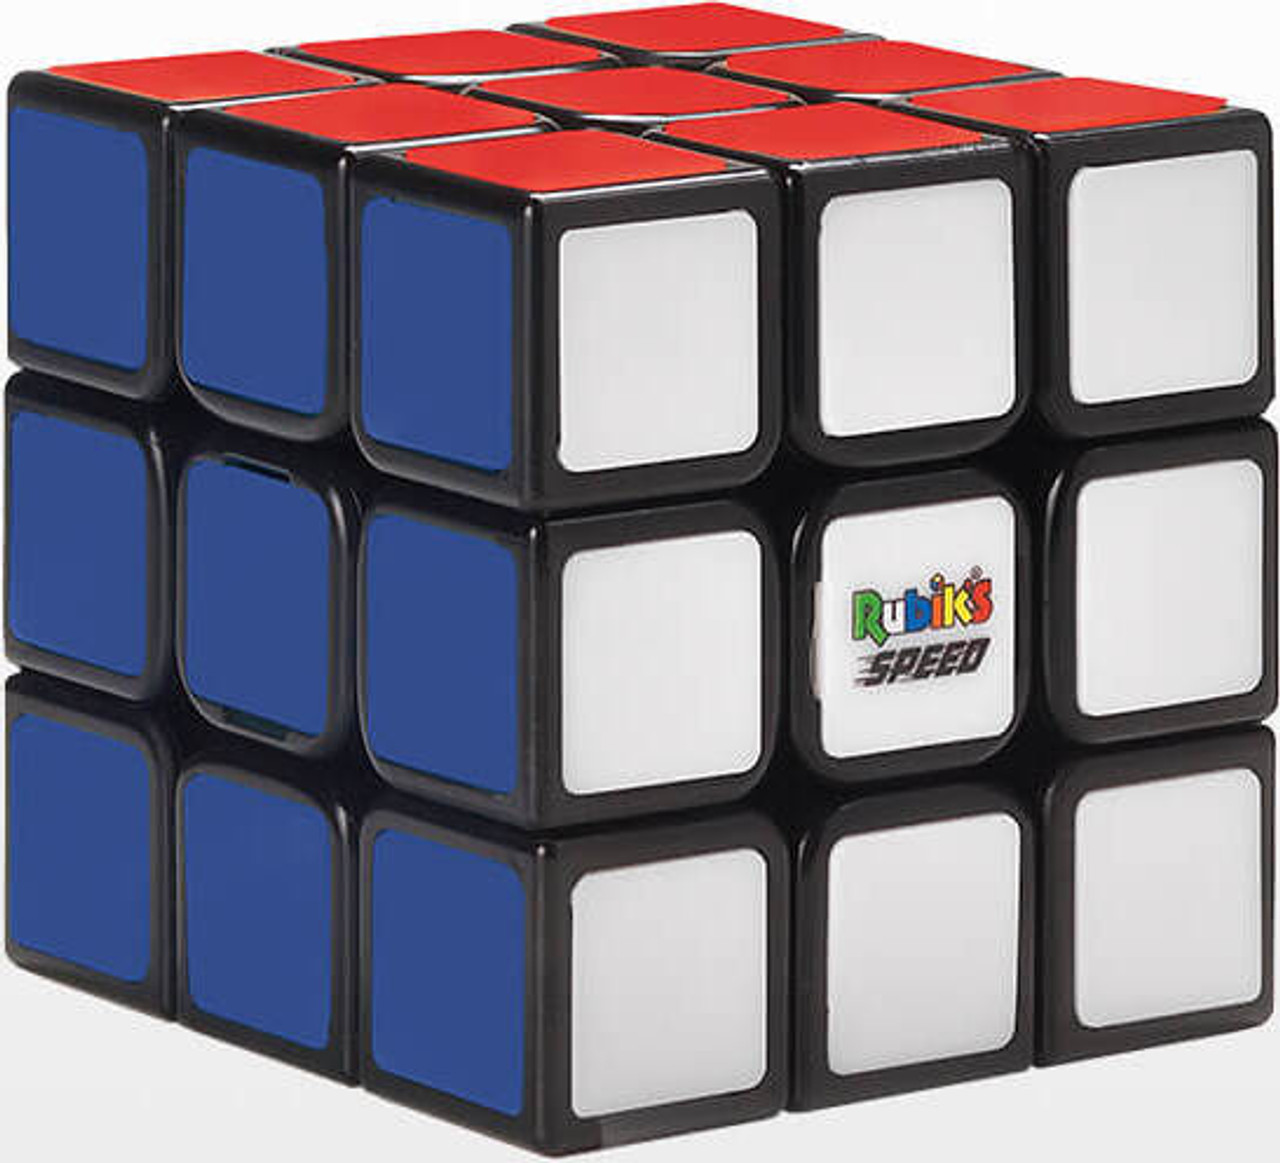 Rubik's Cube - 3x3 Speed Cube 2